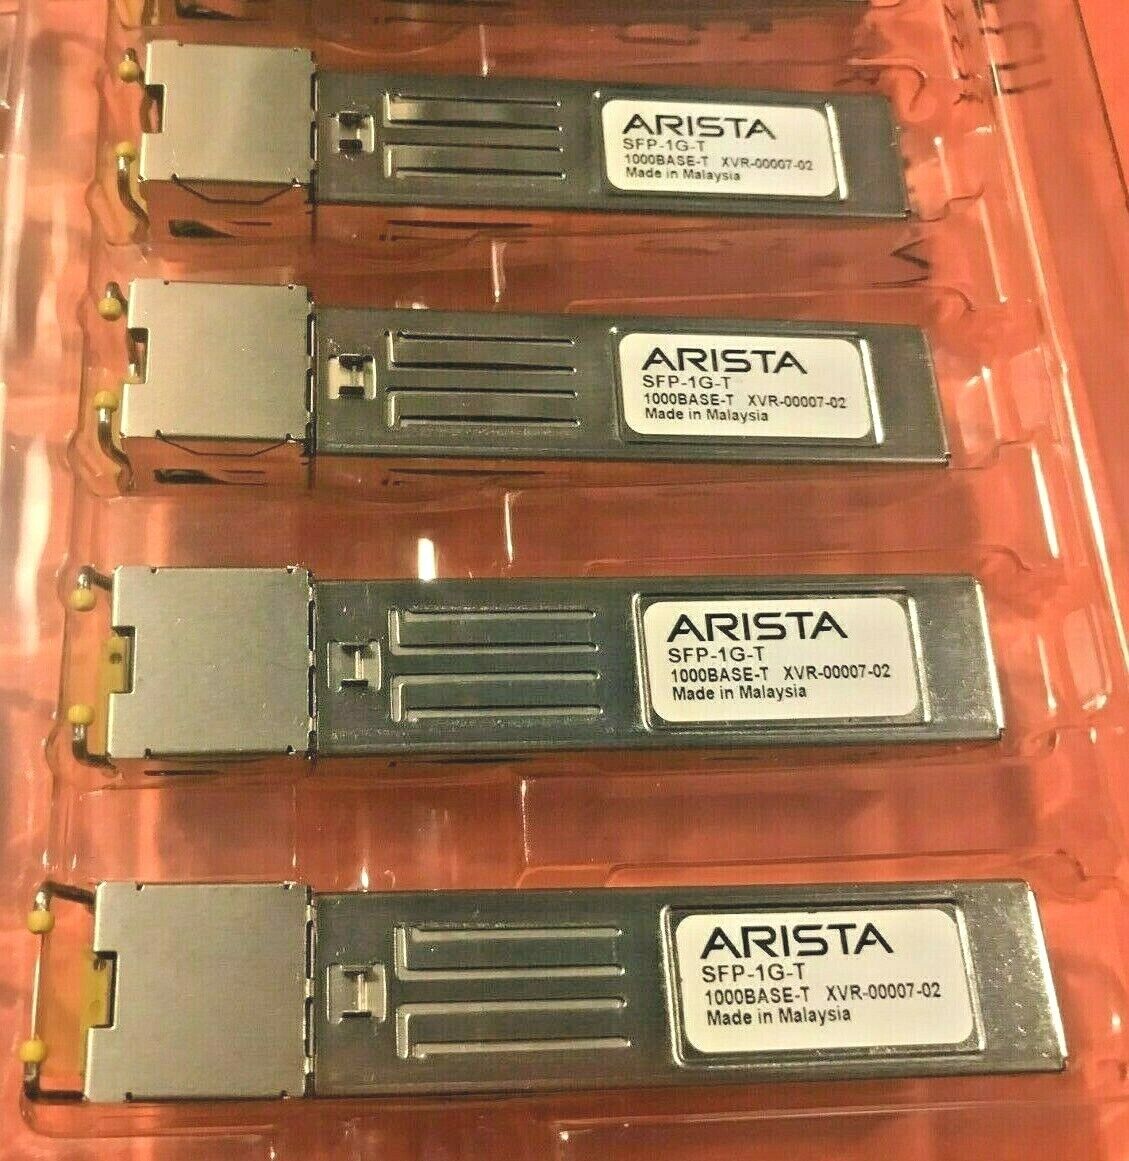 ARISTA SFP-1G-T RJ-45 1000BASE-T XVR-00007-02 1GbE Copper SFP+ 400pcs 